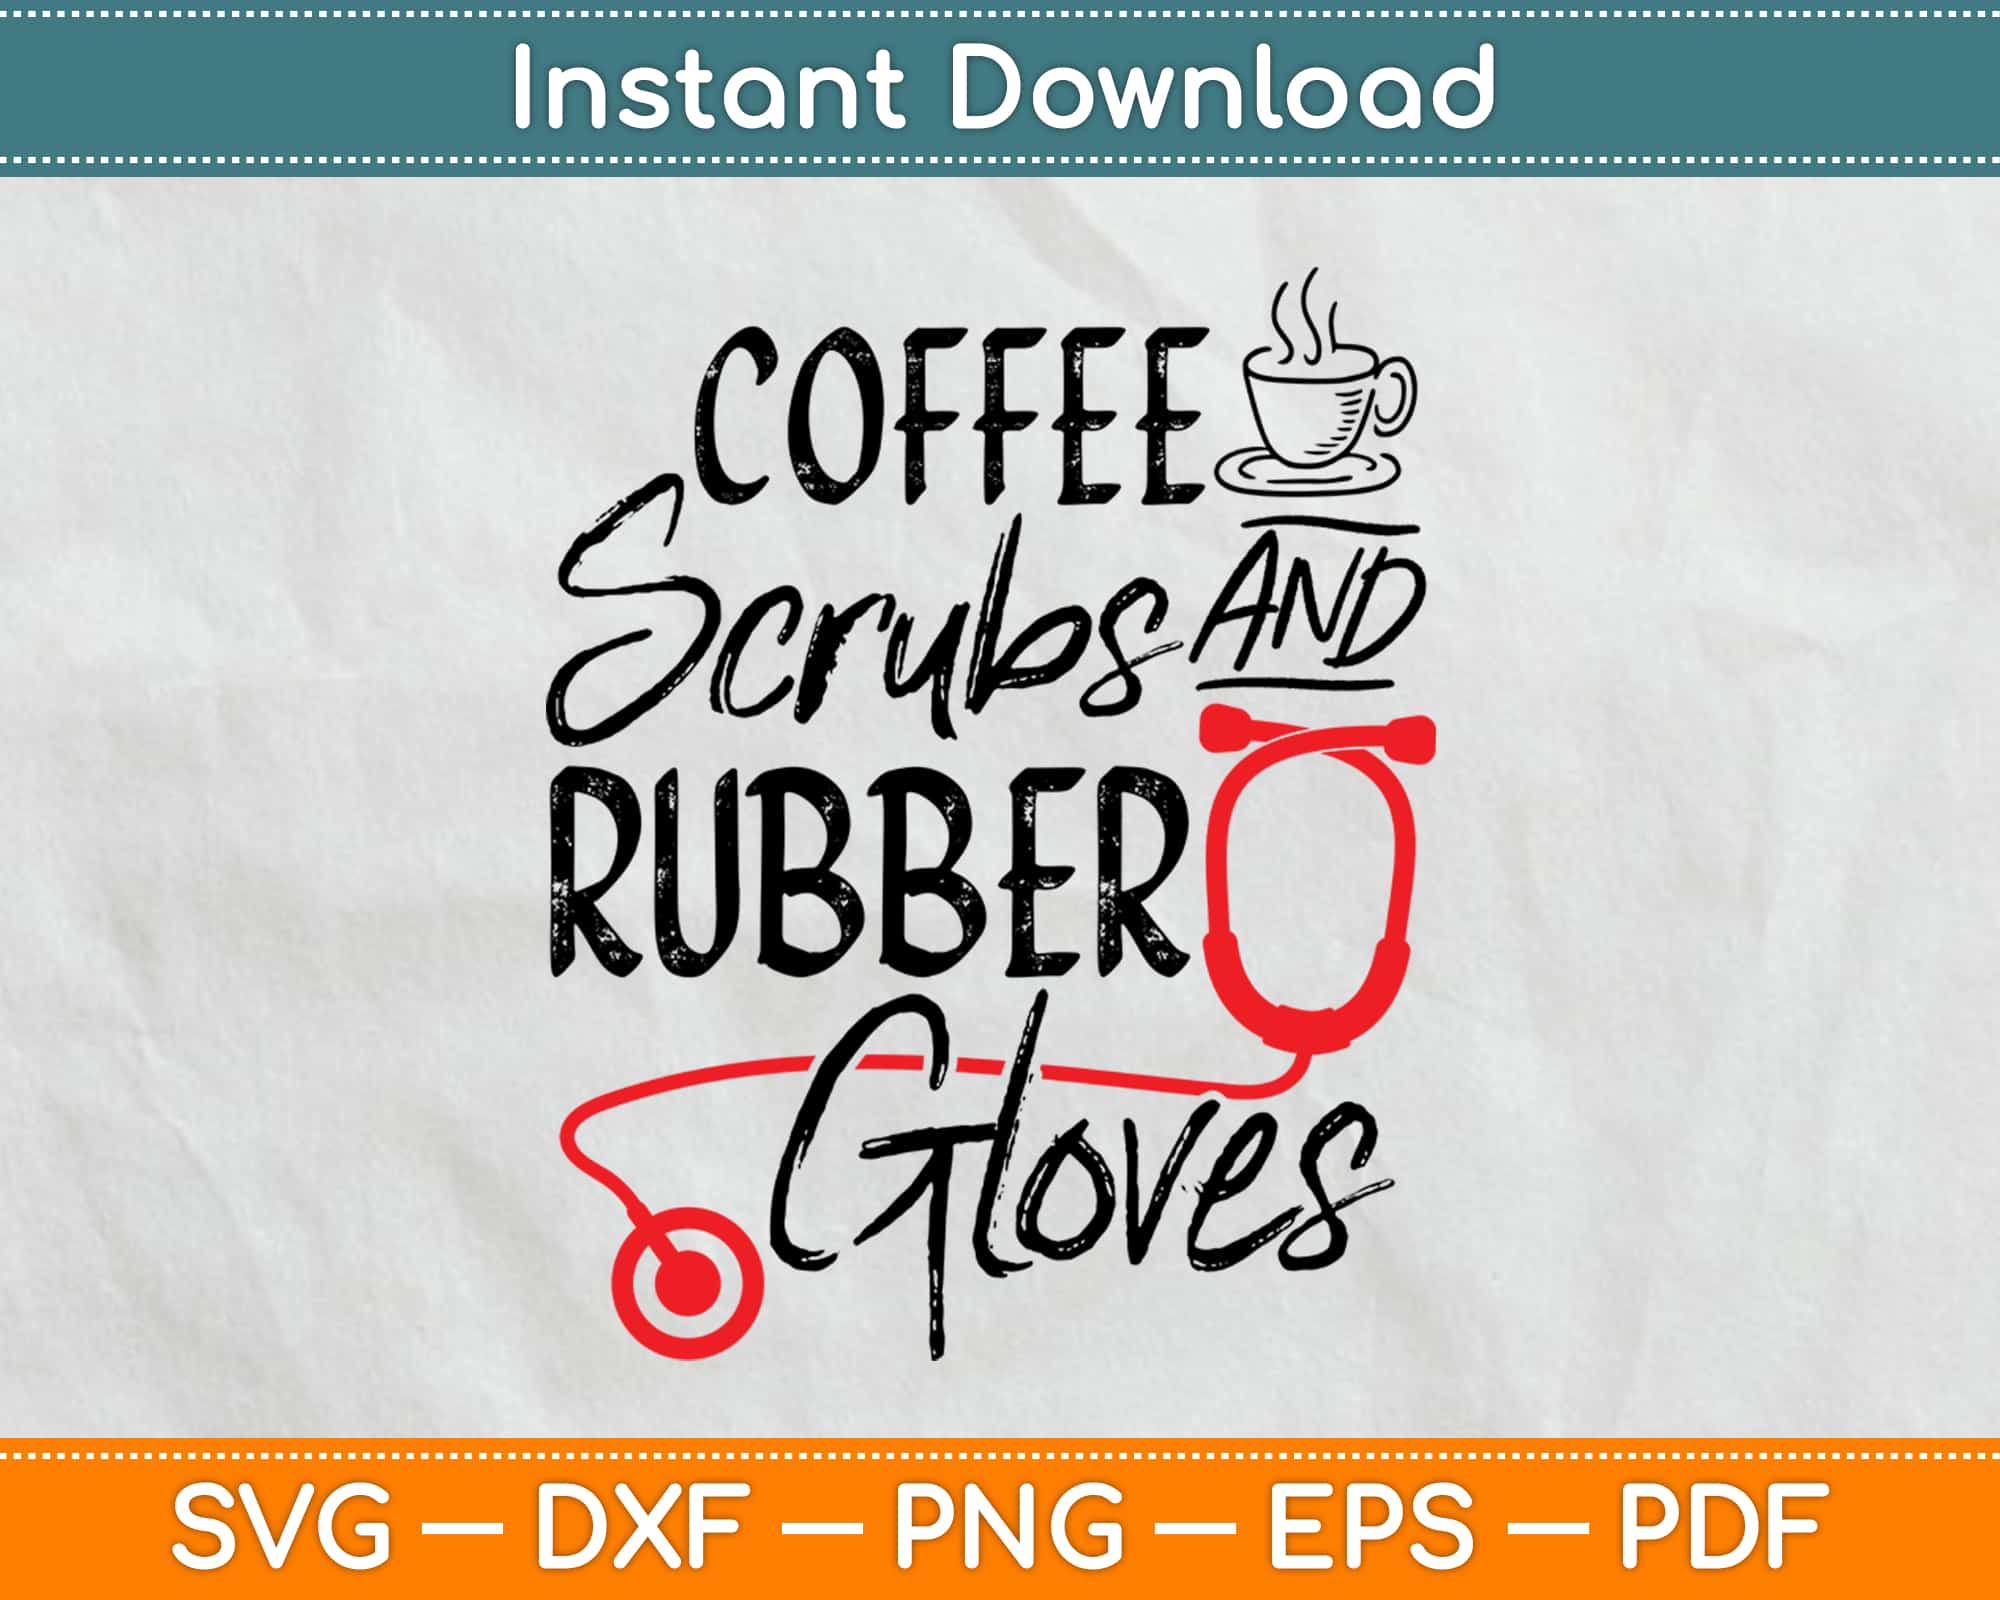 Download Coffee Scrubs And Rubber Gloves Svg Design Cut File Artprintfile